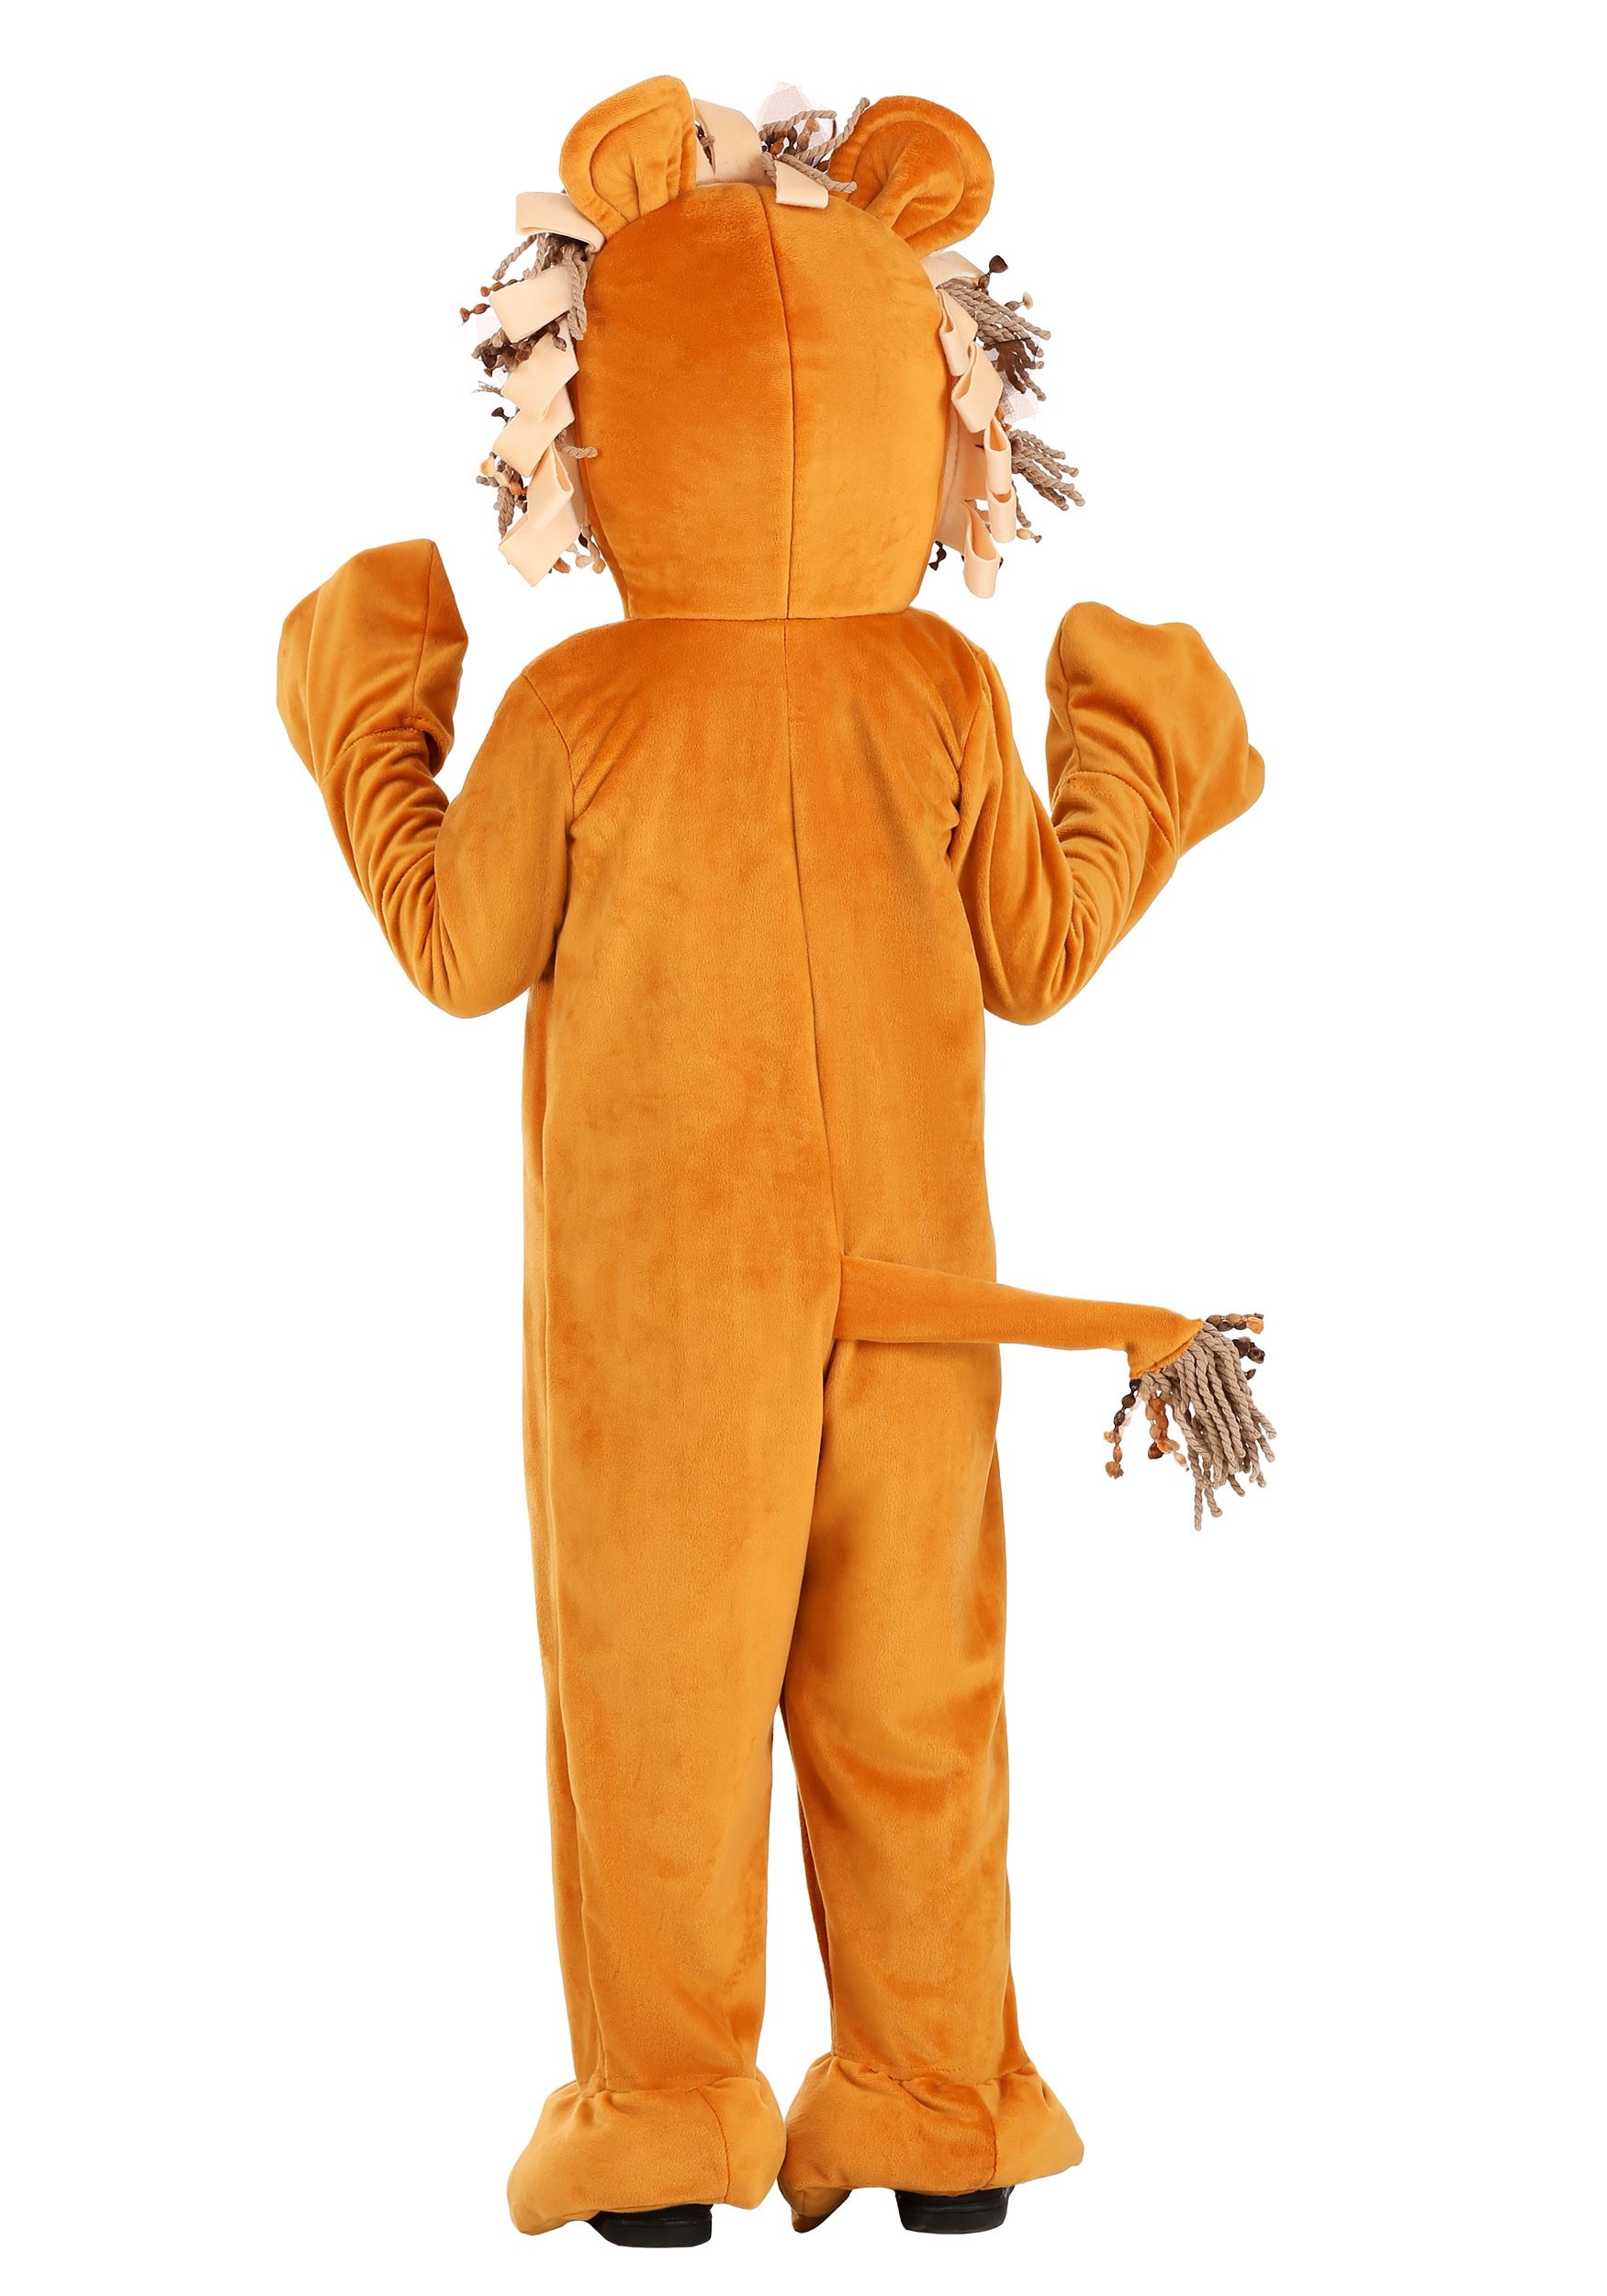 Toddler Costume - Roaring Lion